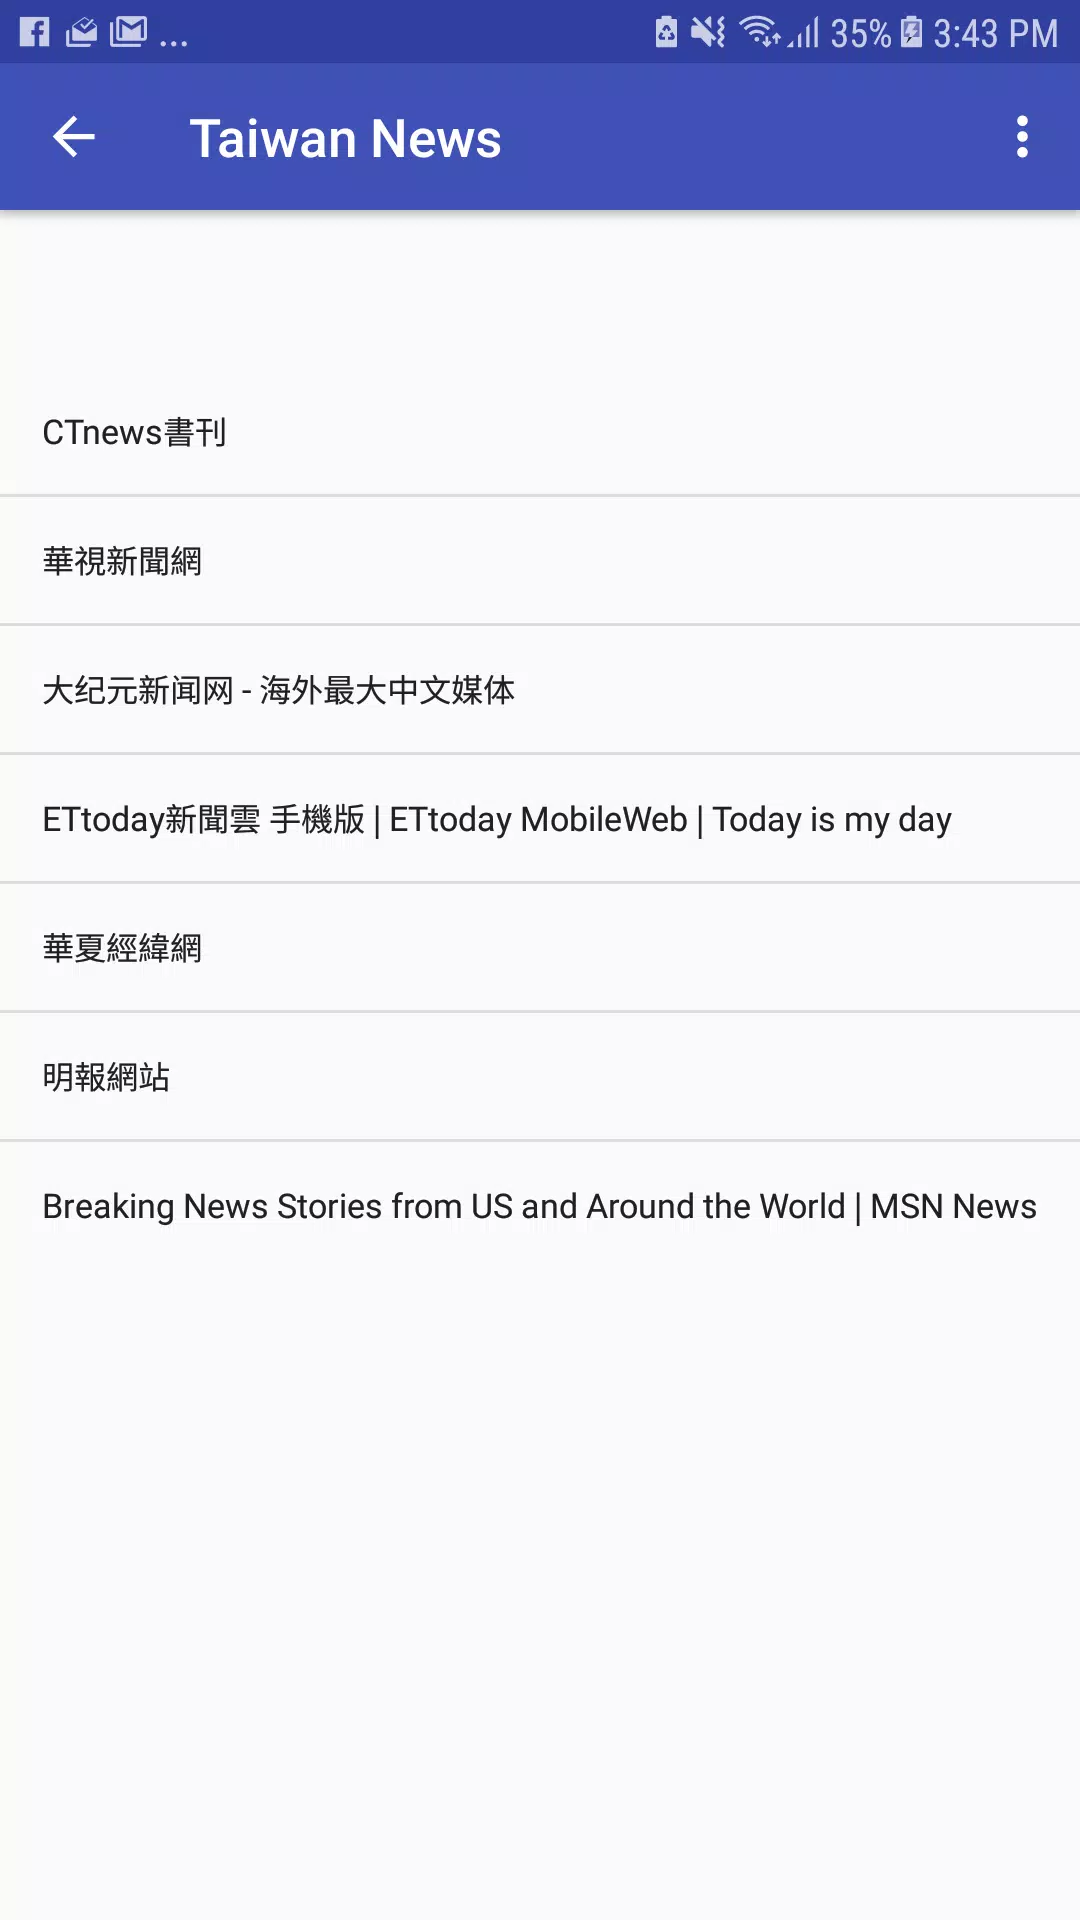 Tiawan News English | Taiwan Newspapers for Android - APK Download